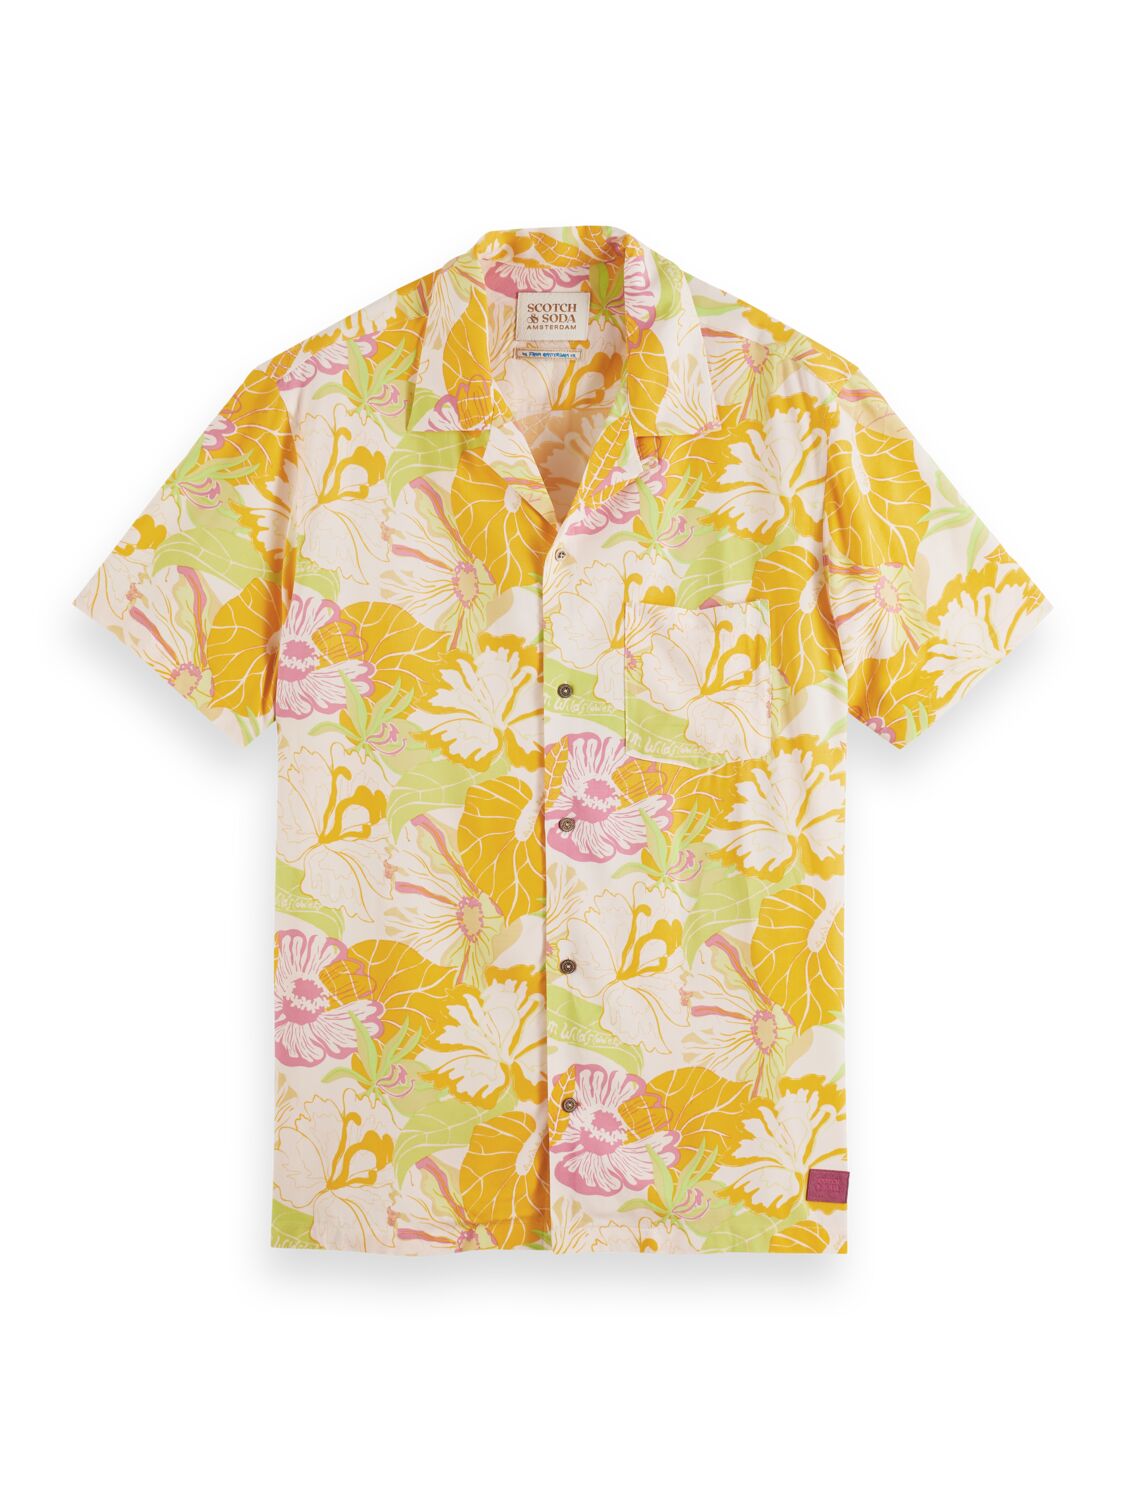 Scotch & Soda Short Sleeve Printed Camp Shirt - Yellow - 1 - Tops - Shirts (Short Sleeve)